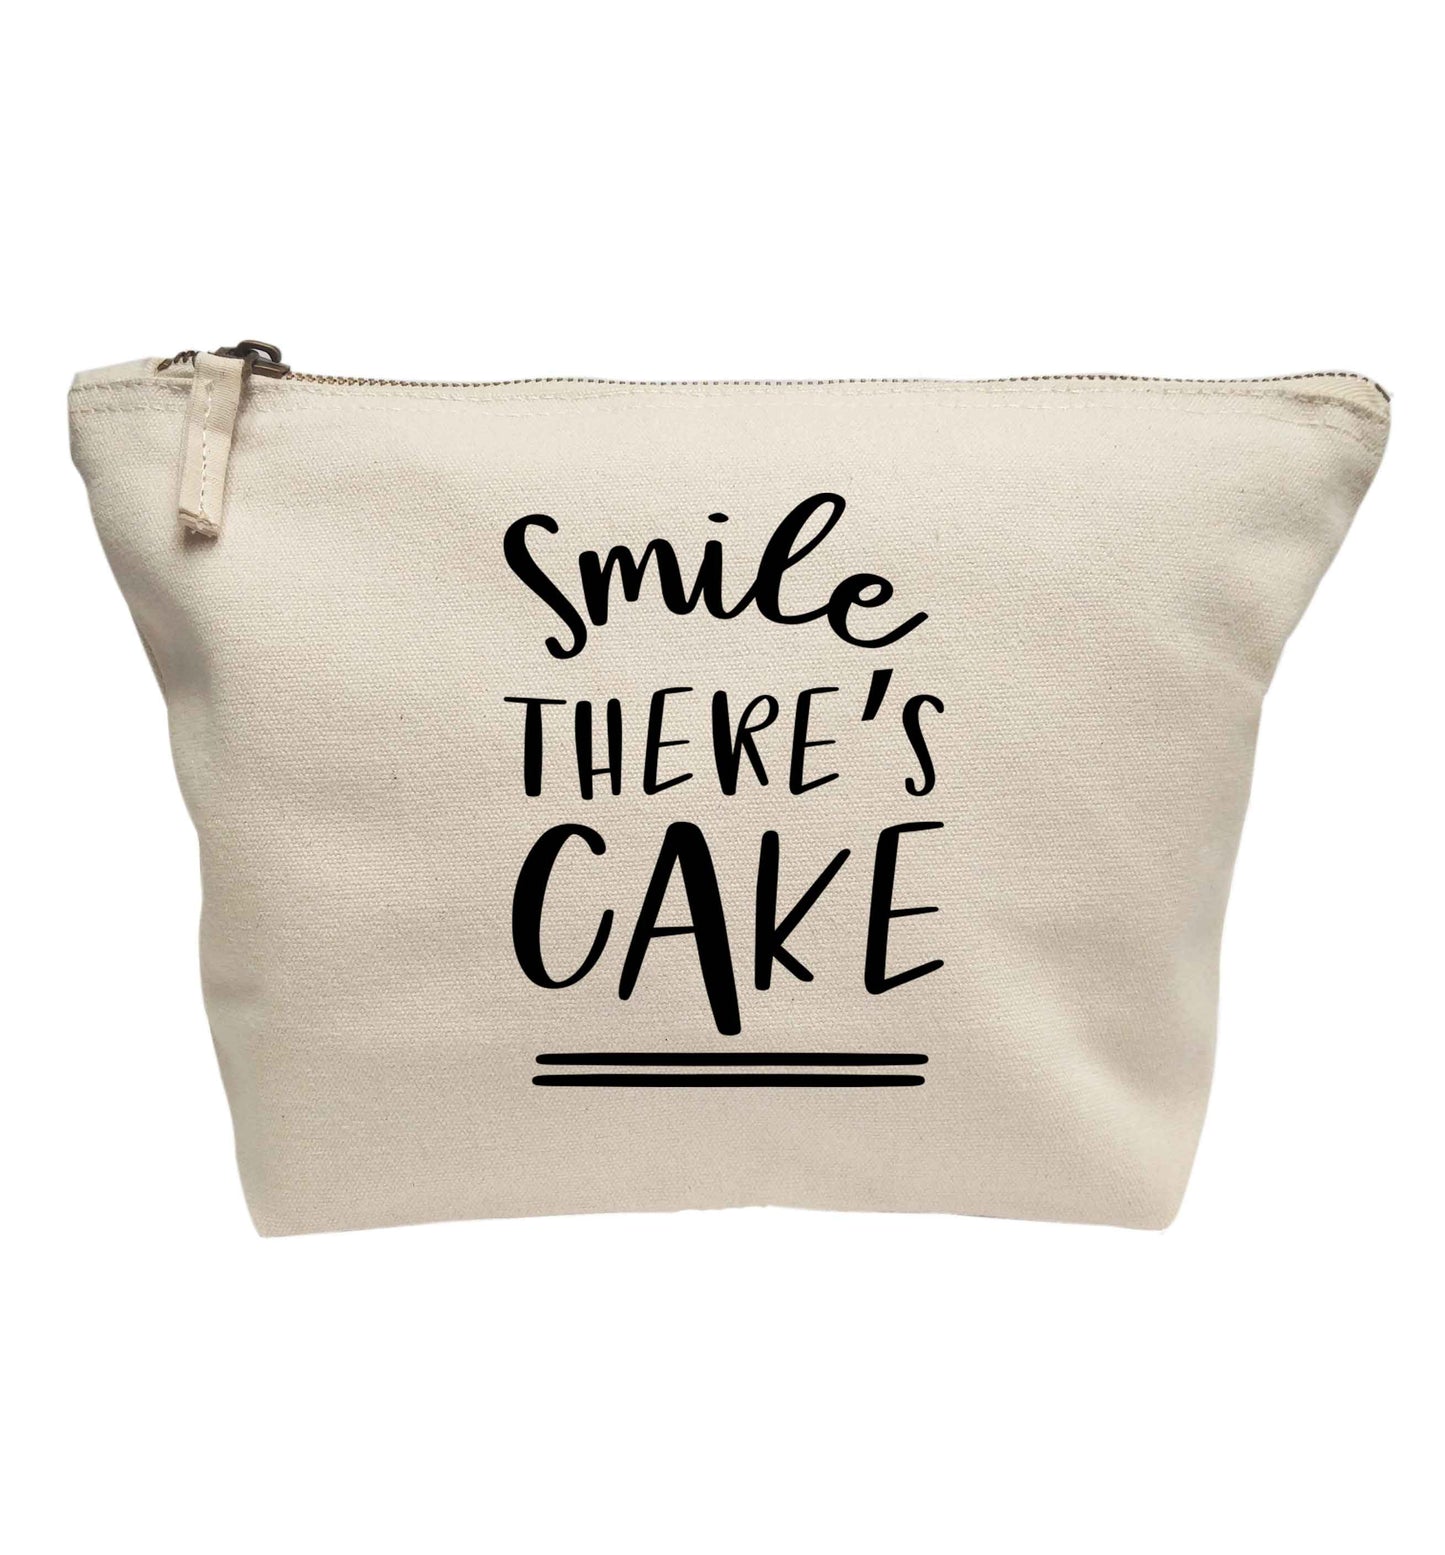 Smile there's cake | makeup / wash bag